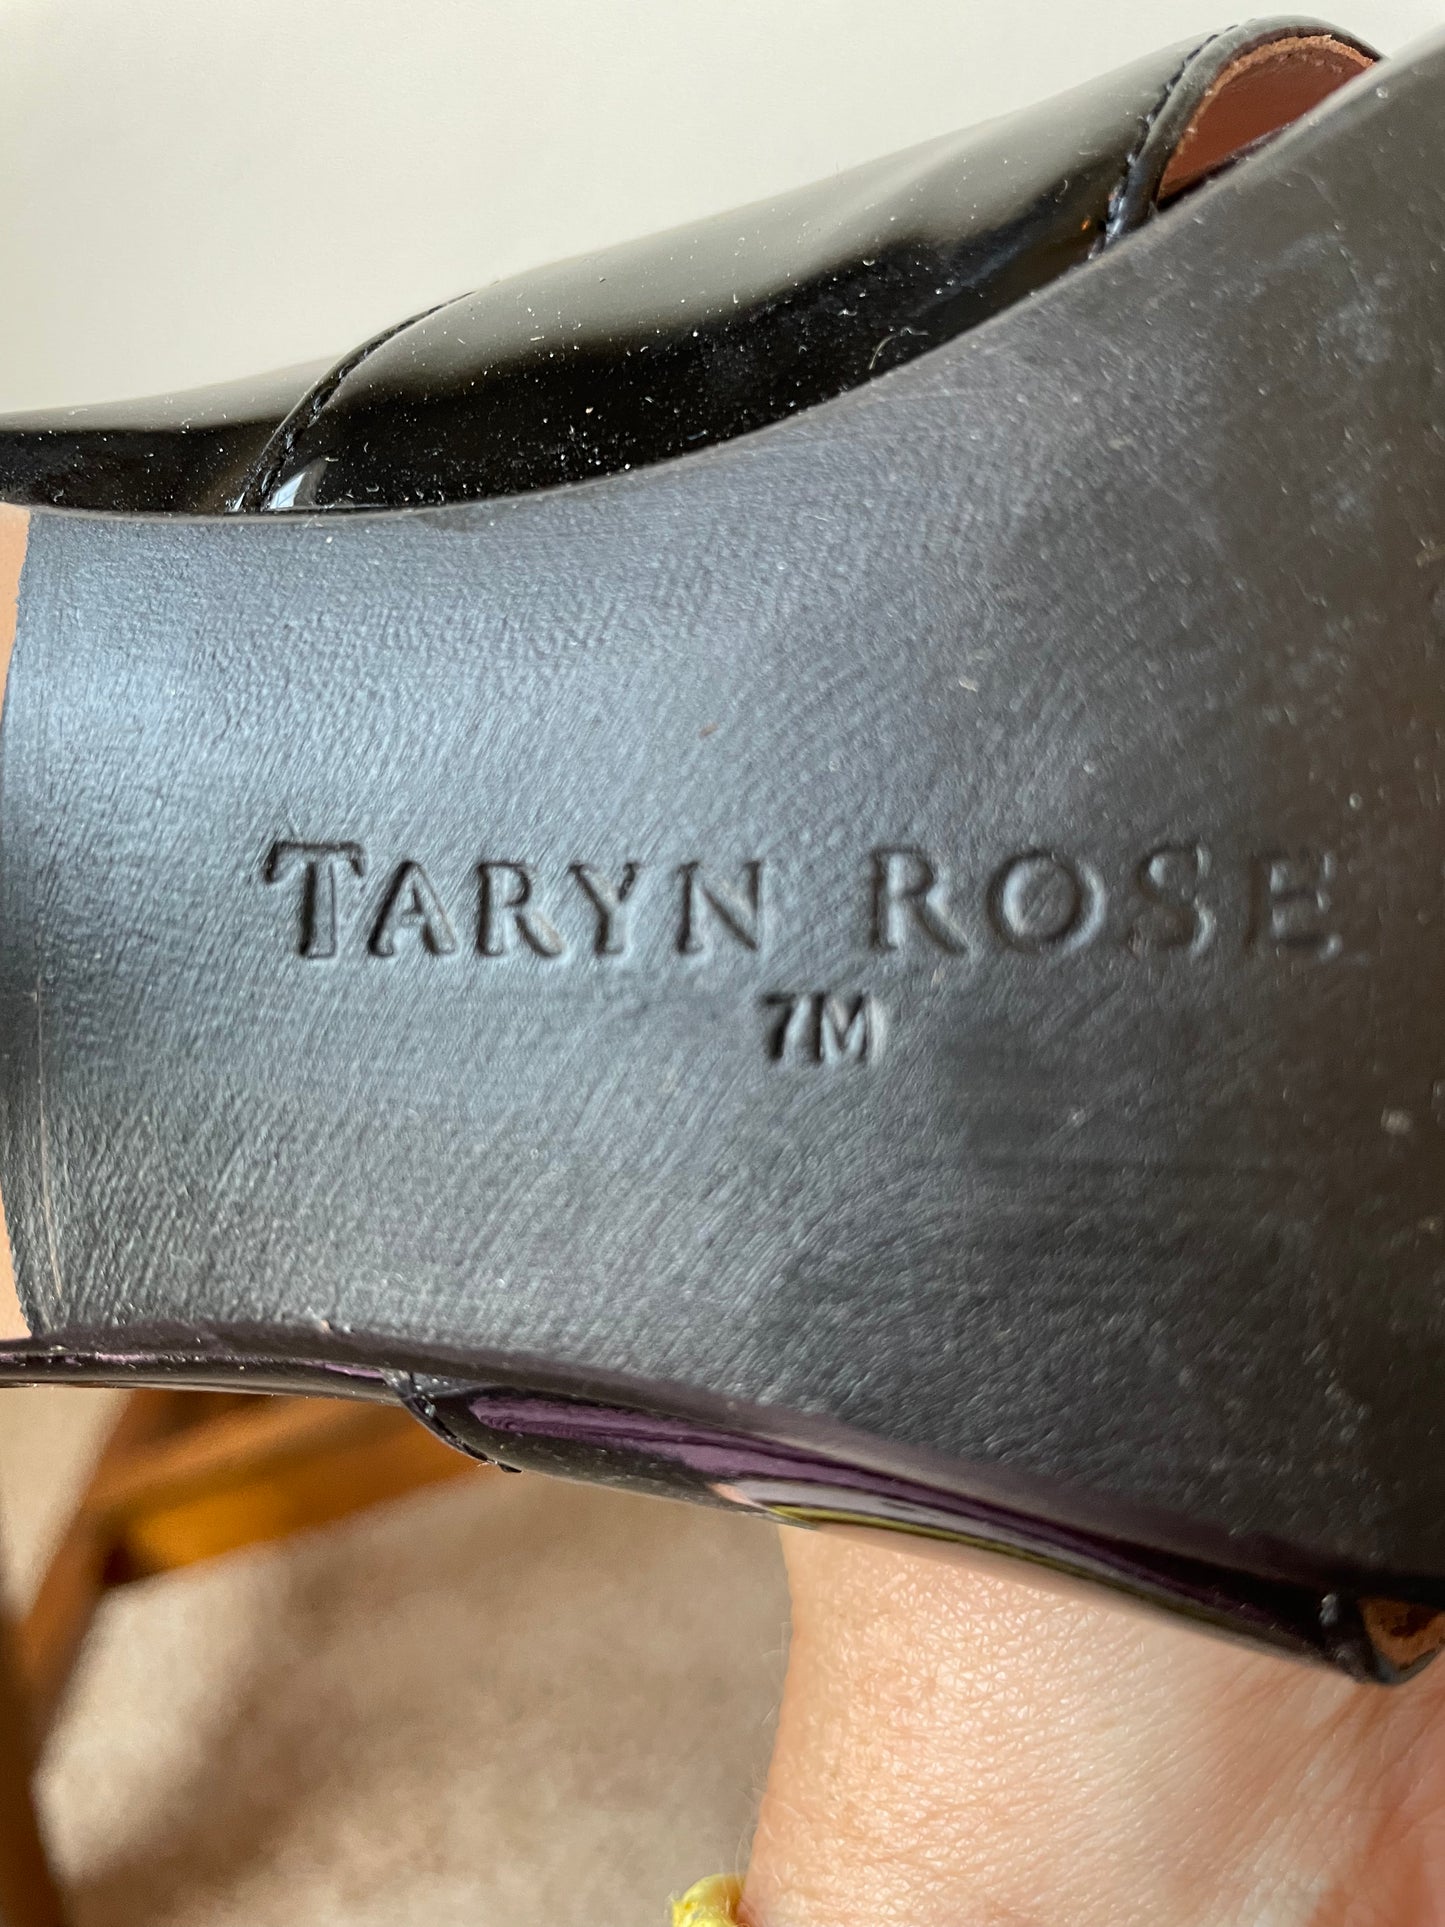 Taryn Rose Slip On Heel (7M)